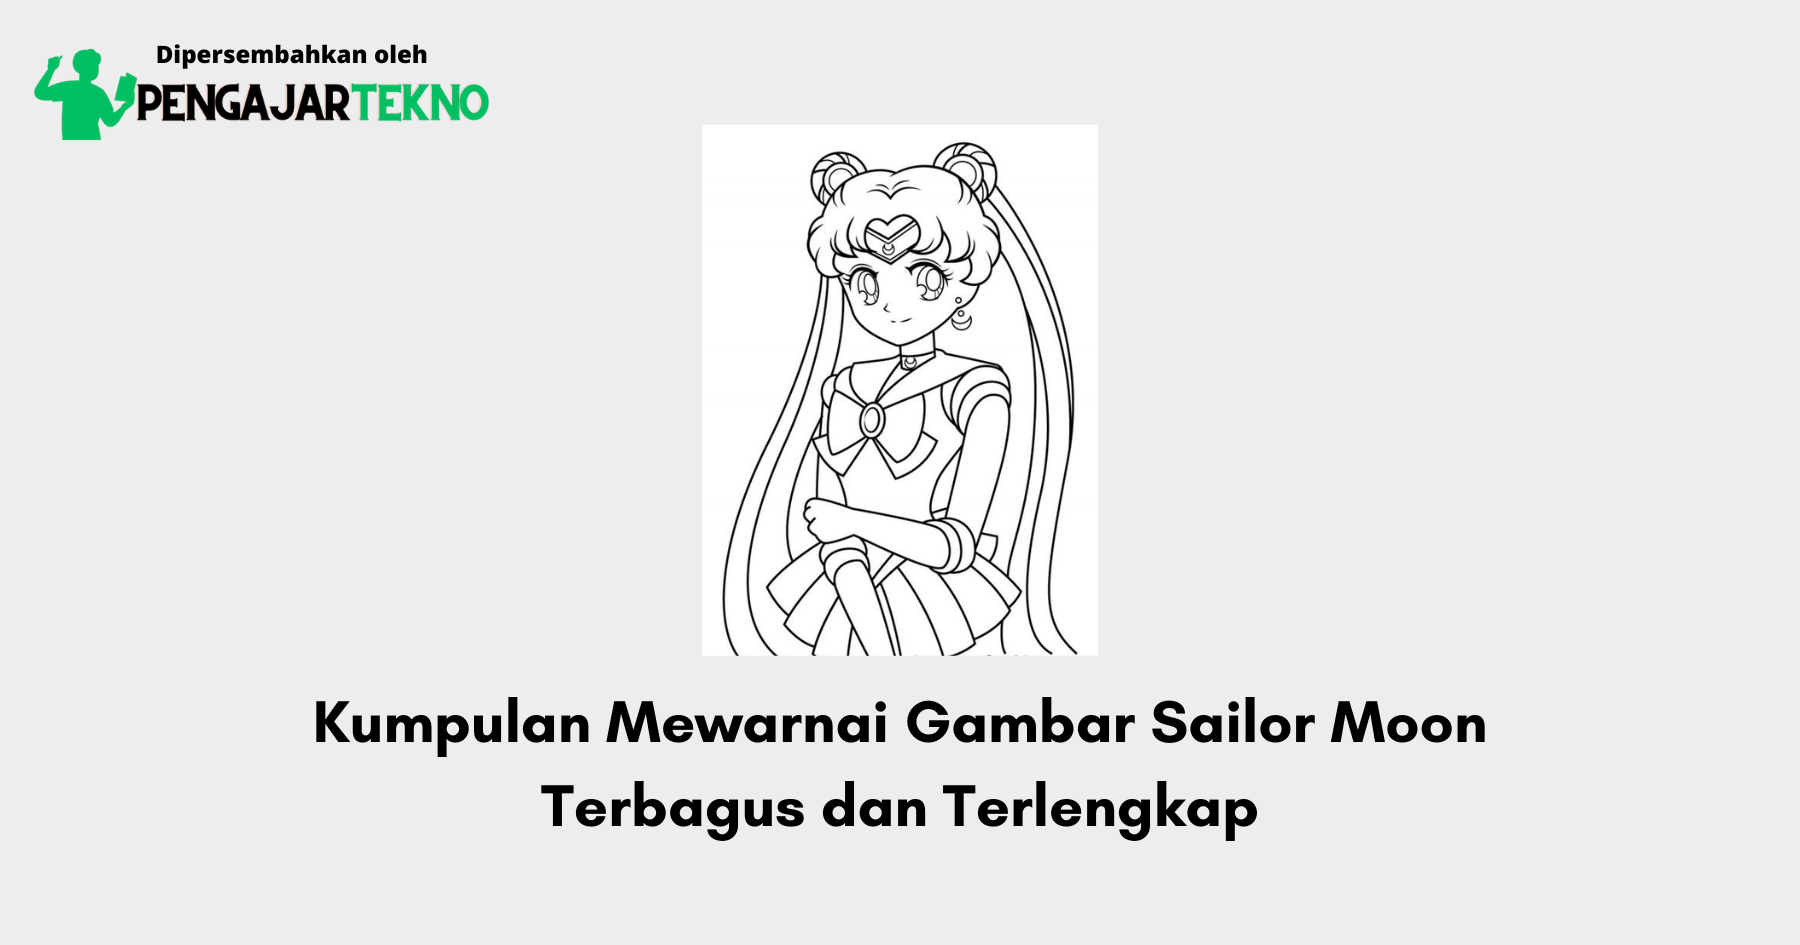 Mewarnai Gambar Sailor Moon